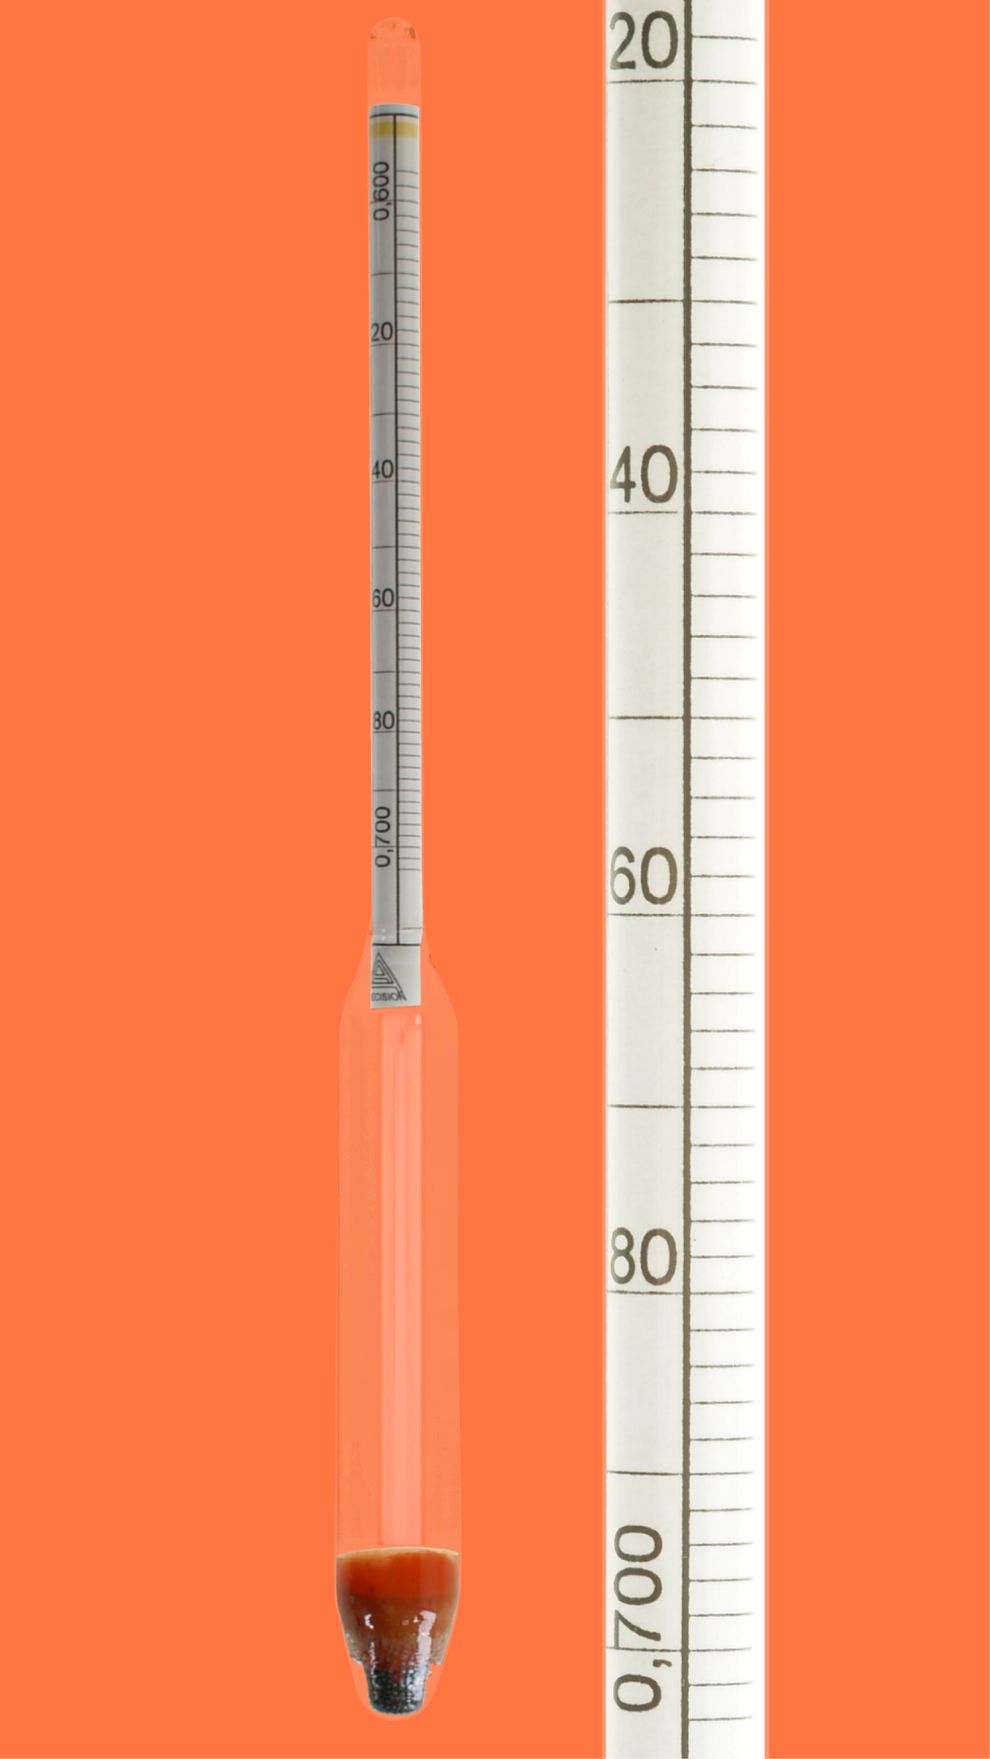 Aräometer, DIN 12791, M100, 1,20-1,30:0,0020g/cm³, Bezugstemp. 20°C, ohne Thermometer